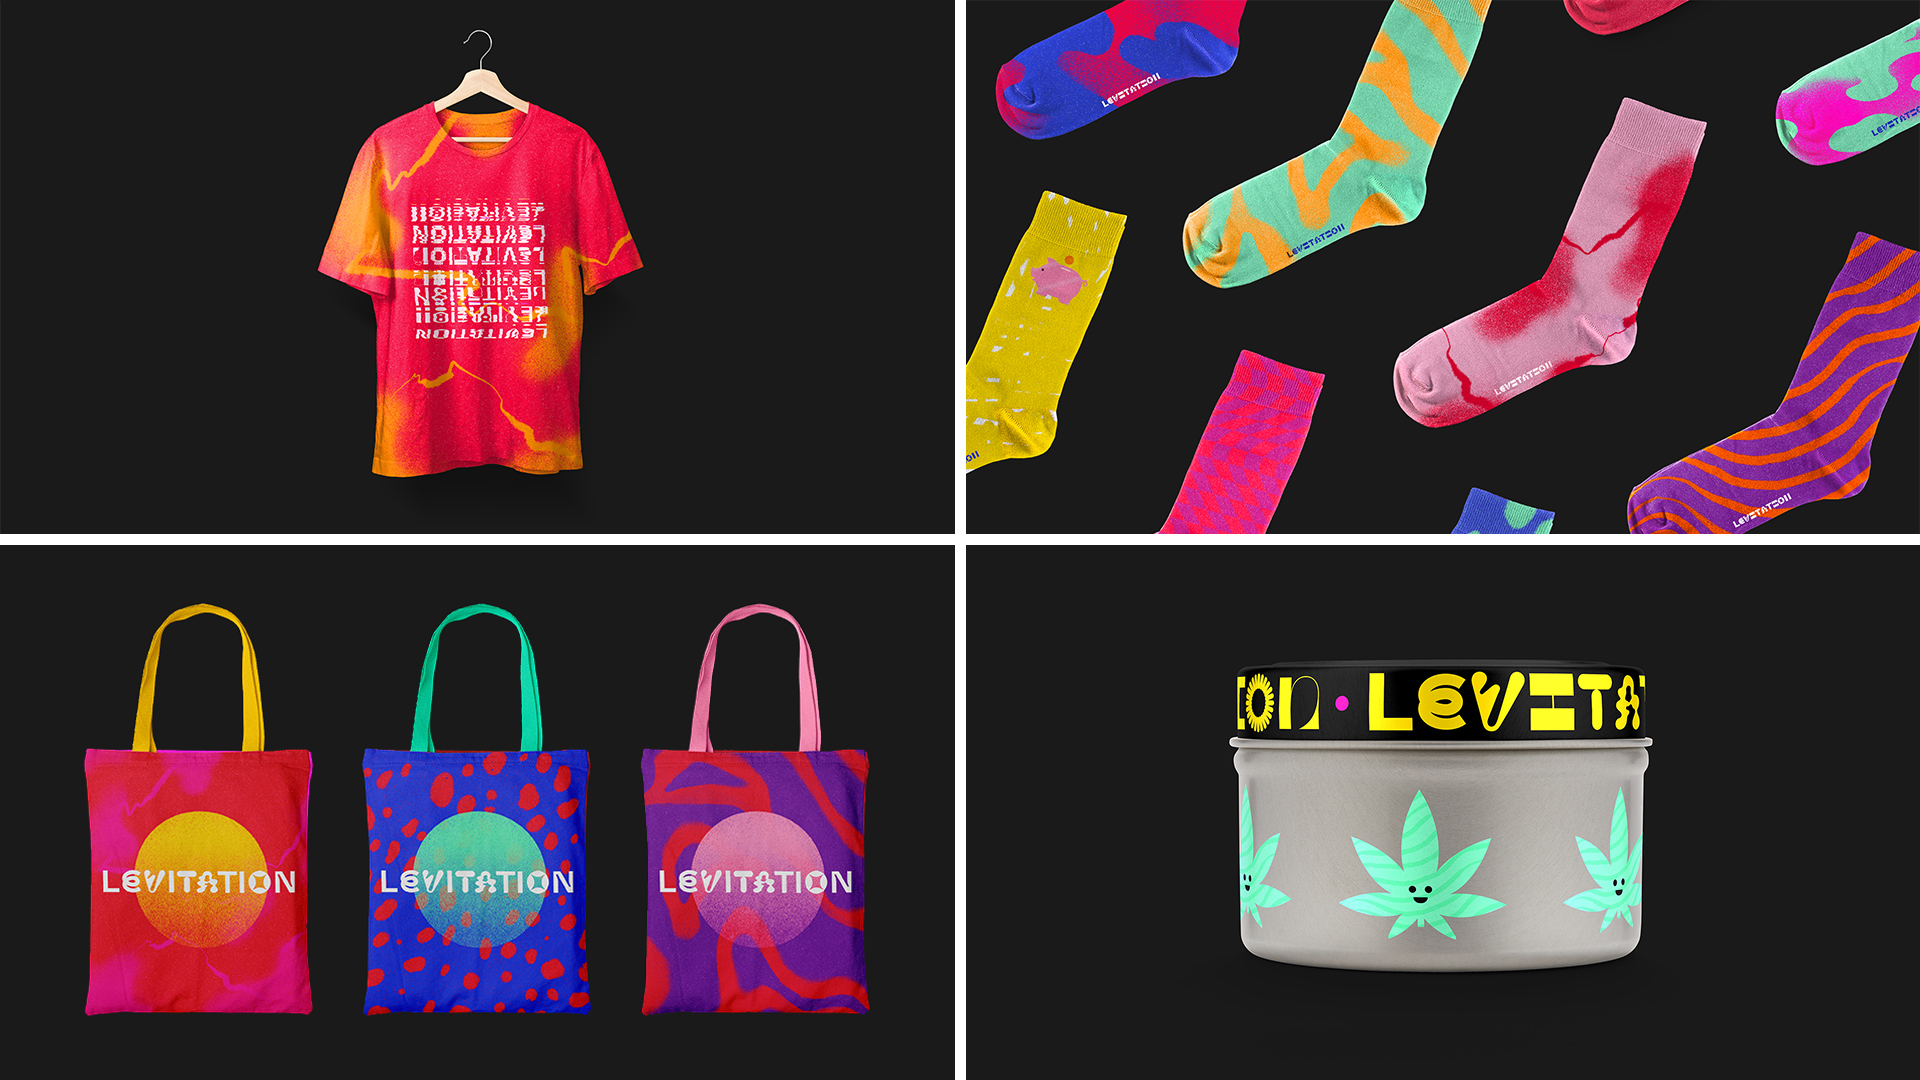 Levitation merch design, t-shirt, socks, tote bags and herb grinder